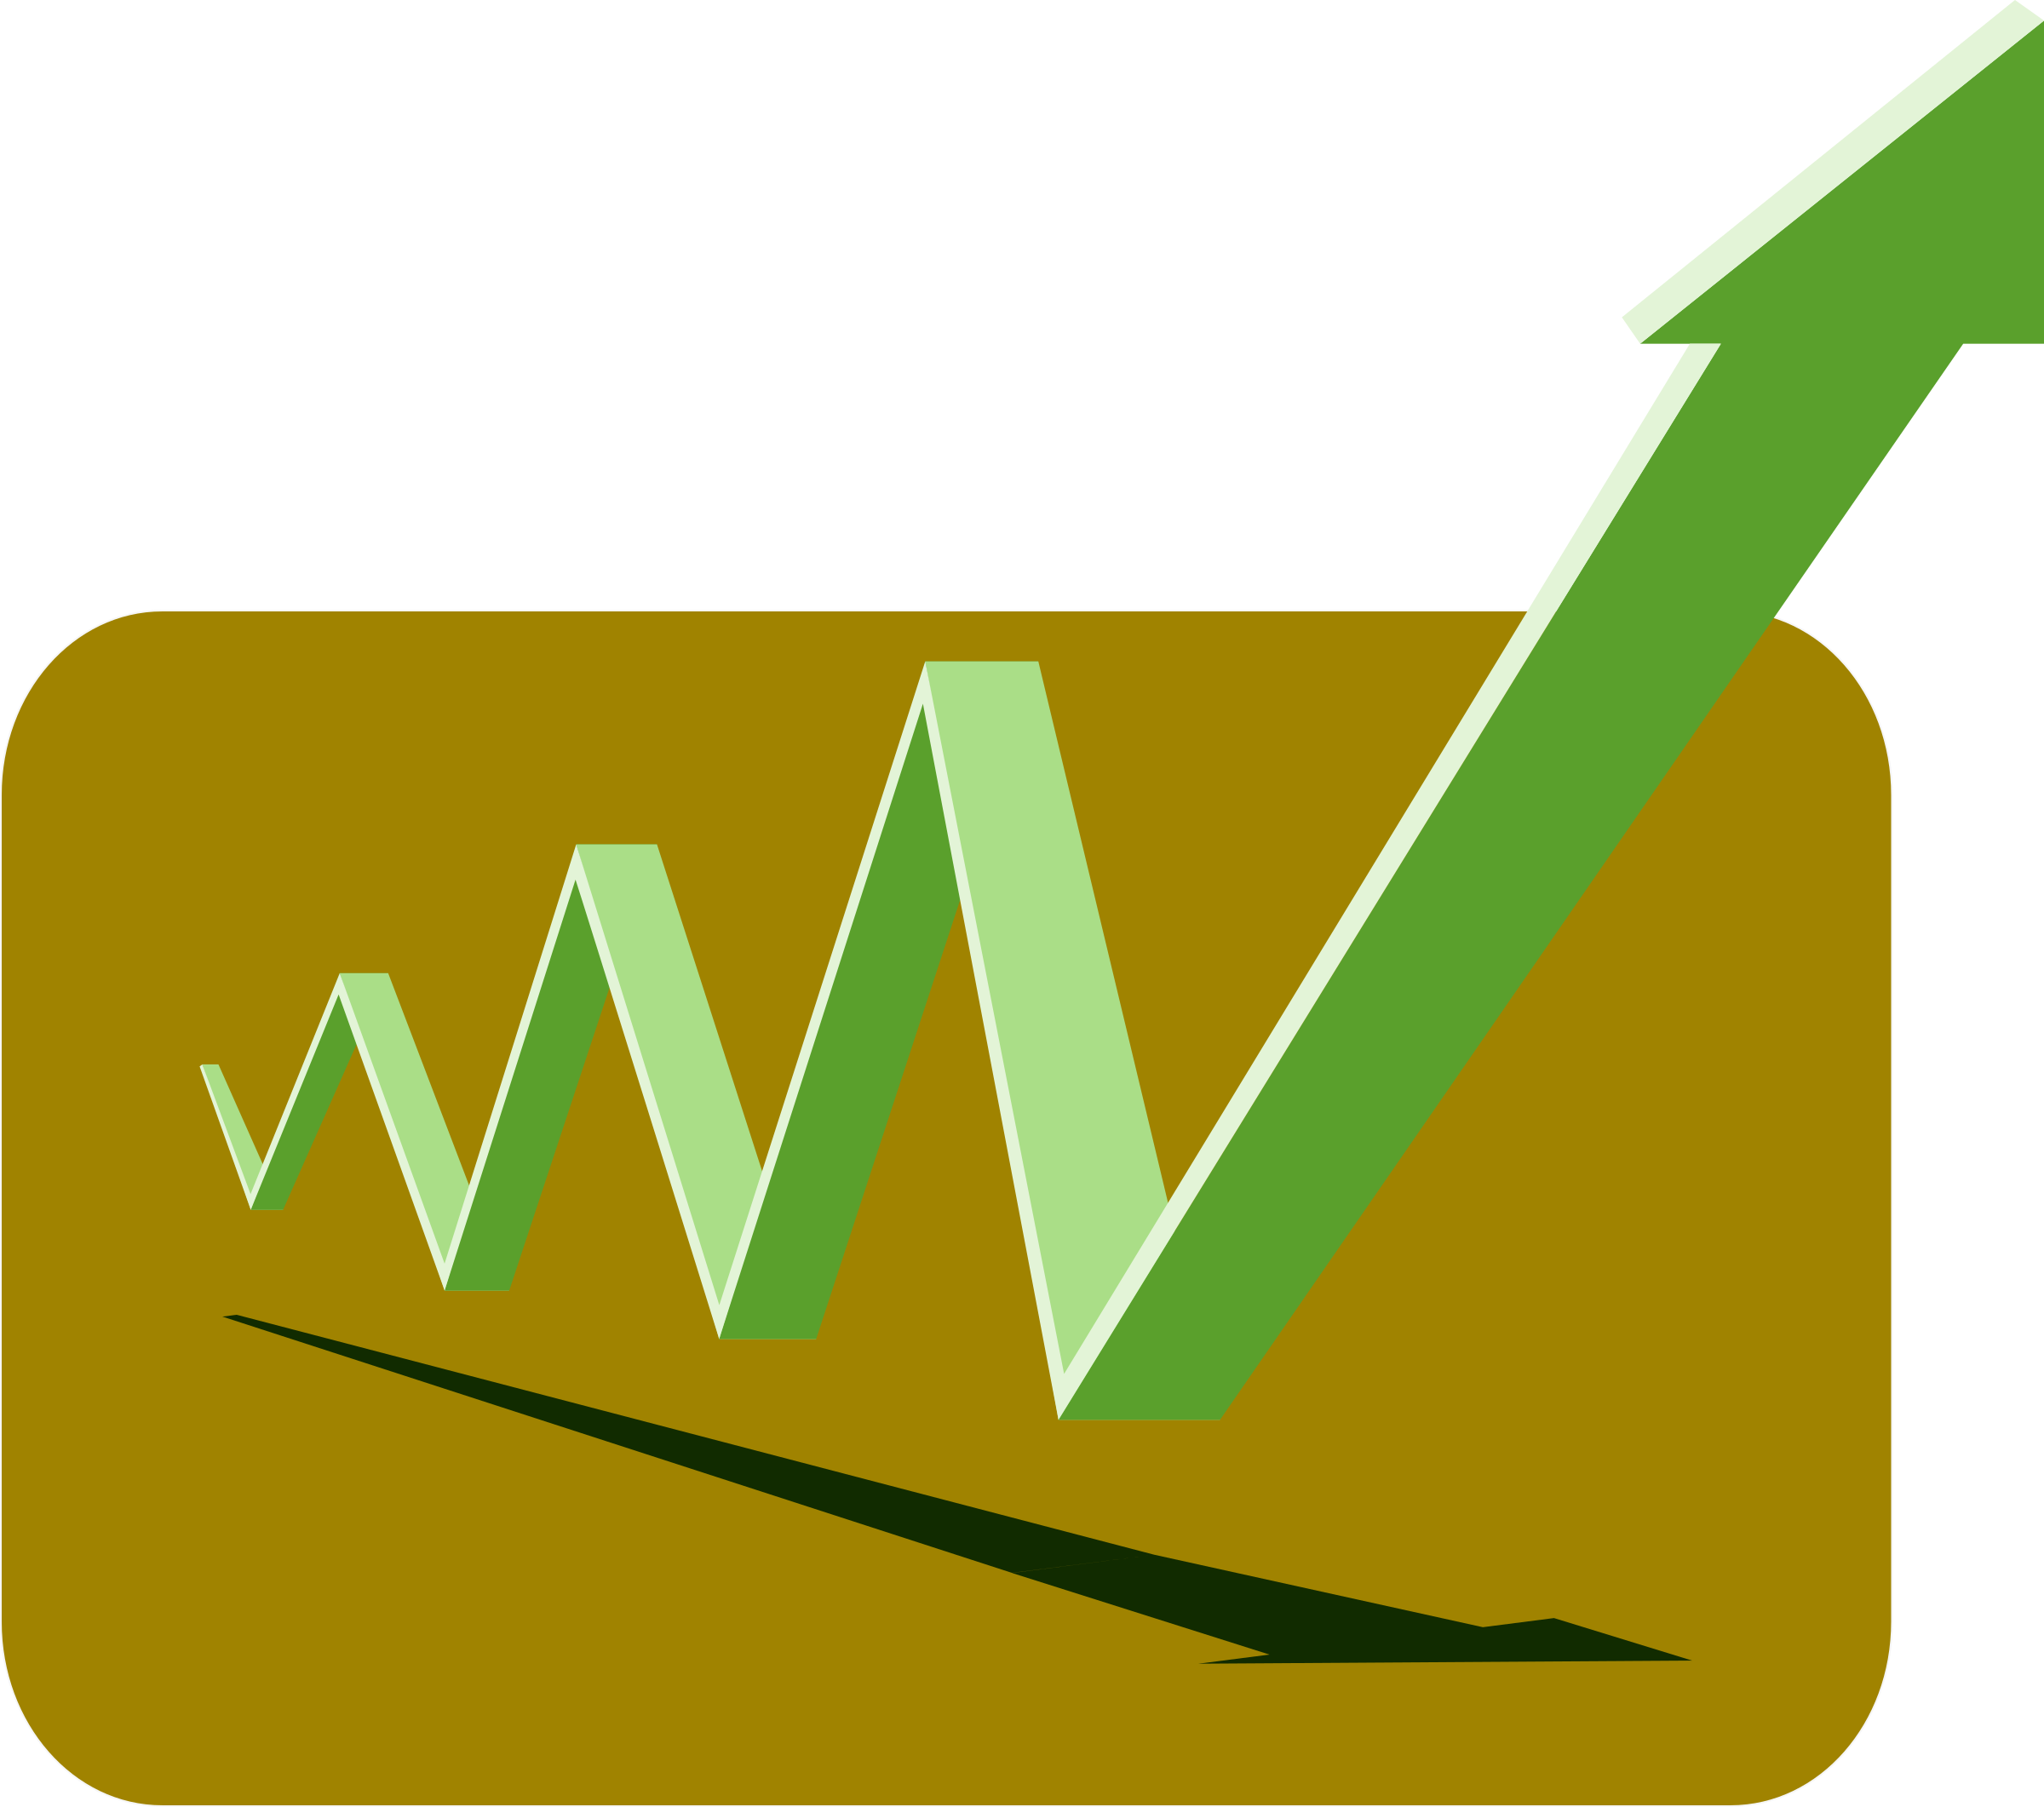 Finance clipart logo. Financial graph arrows green